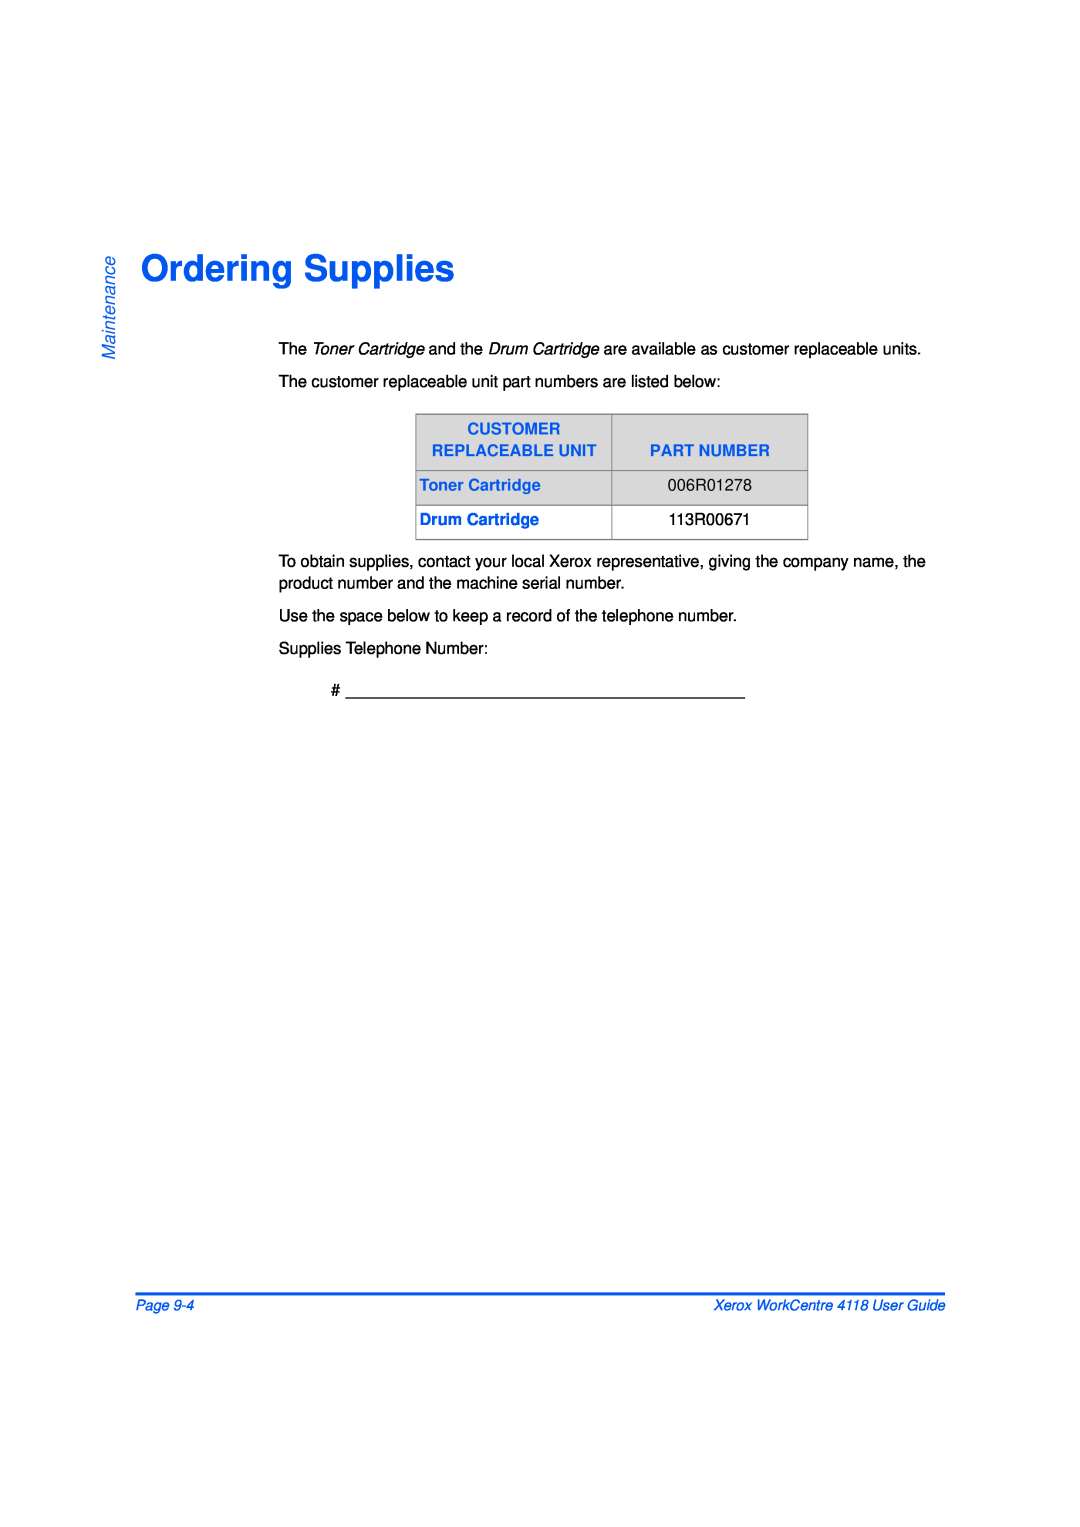 Xerox 32N00467 manual Ordering Supplies, Maintenance, Customer, Replaceable Unit, Part Number, Toner Cartridge, 006R01278 